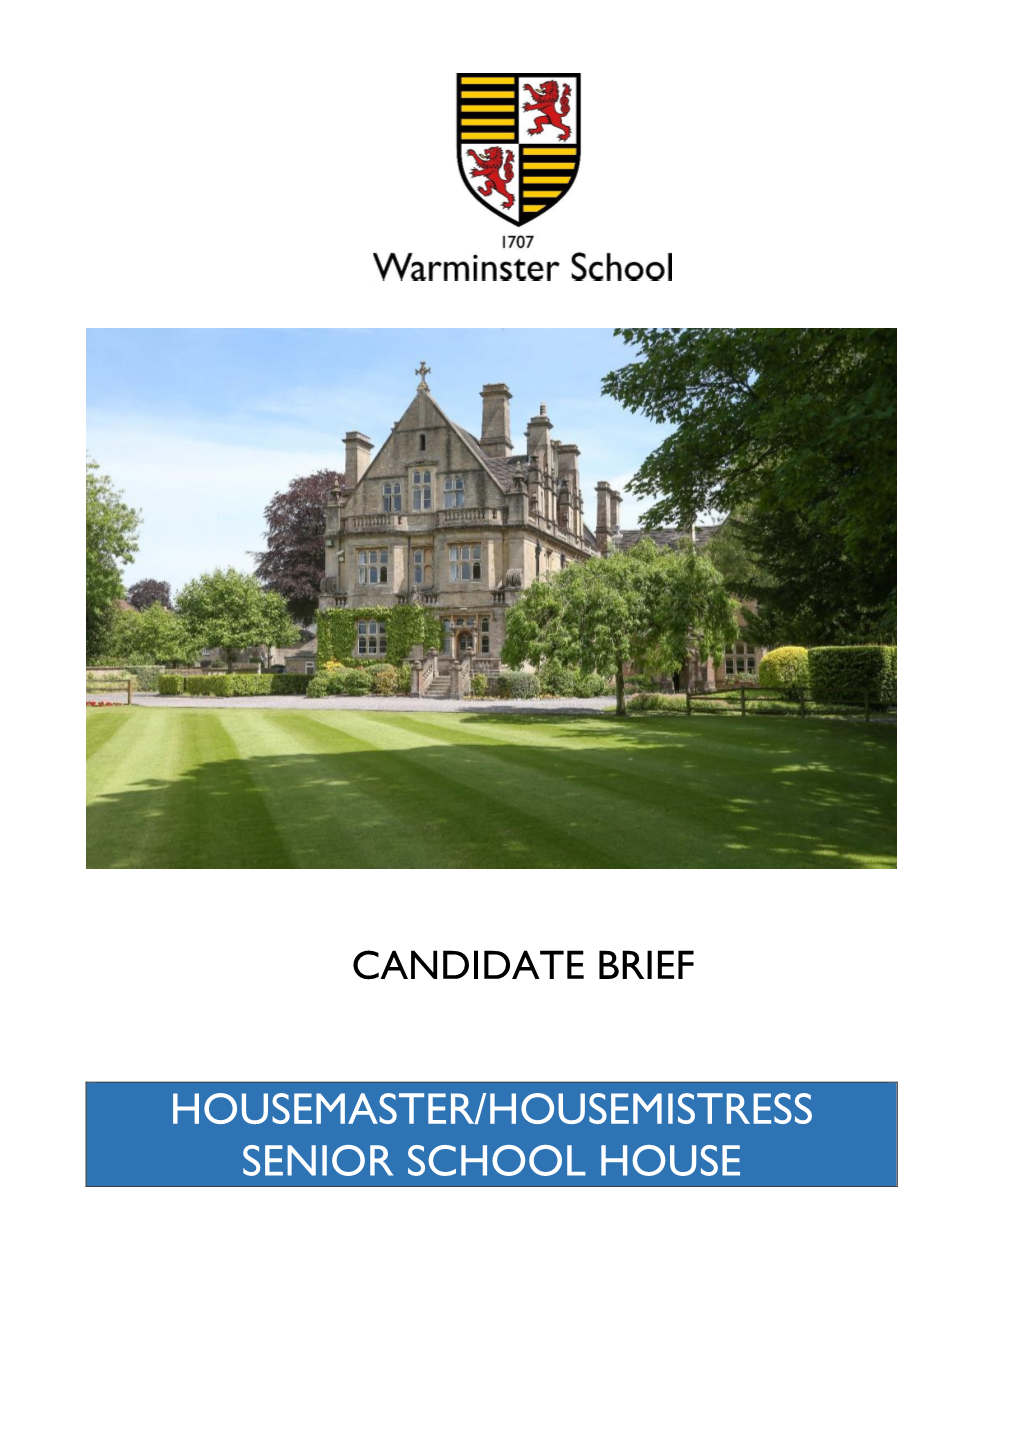 Housemaster/Housemistress Senior School House